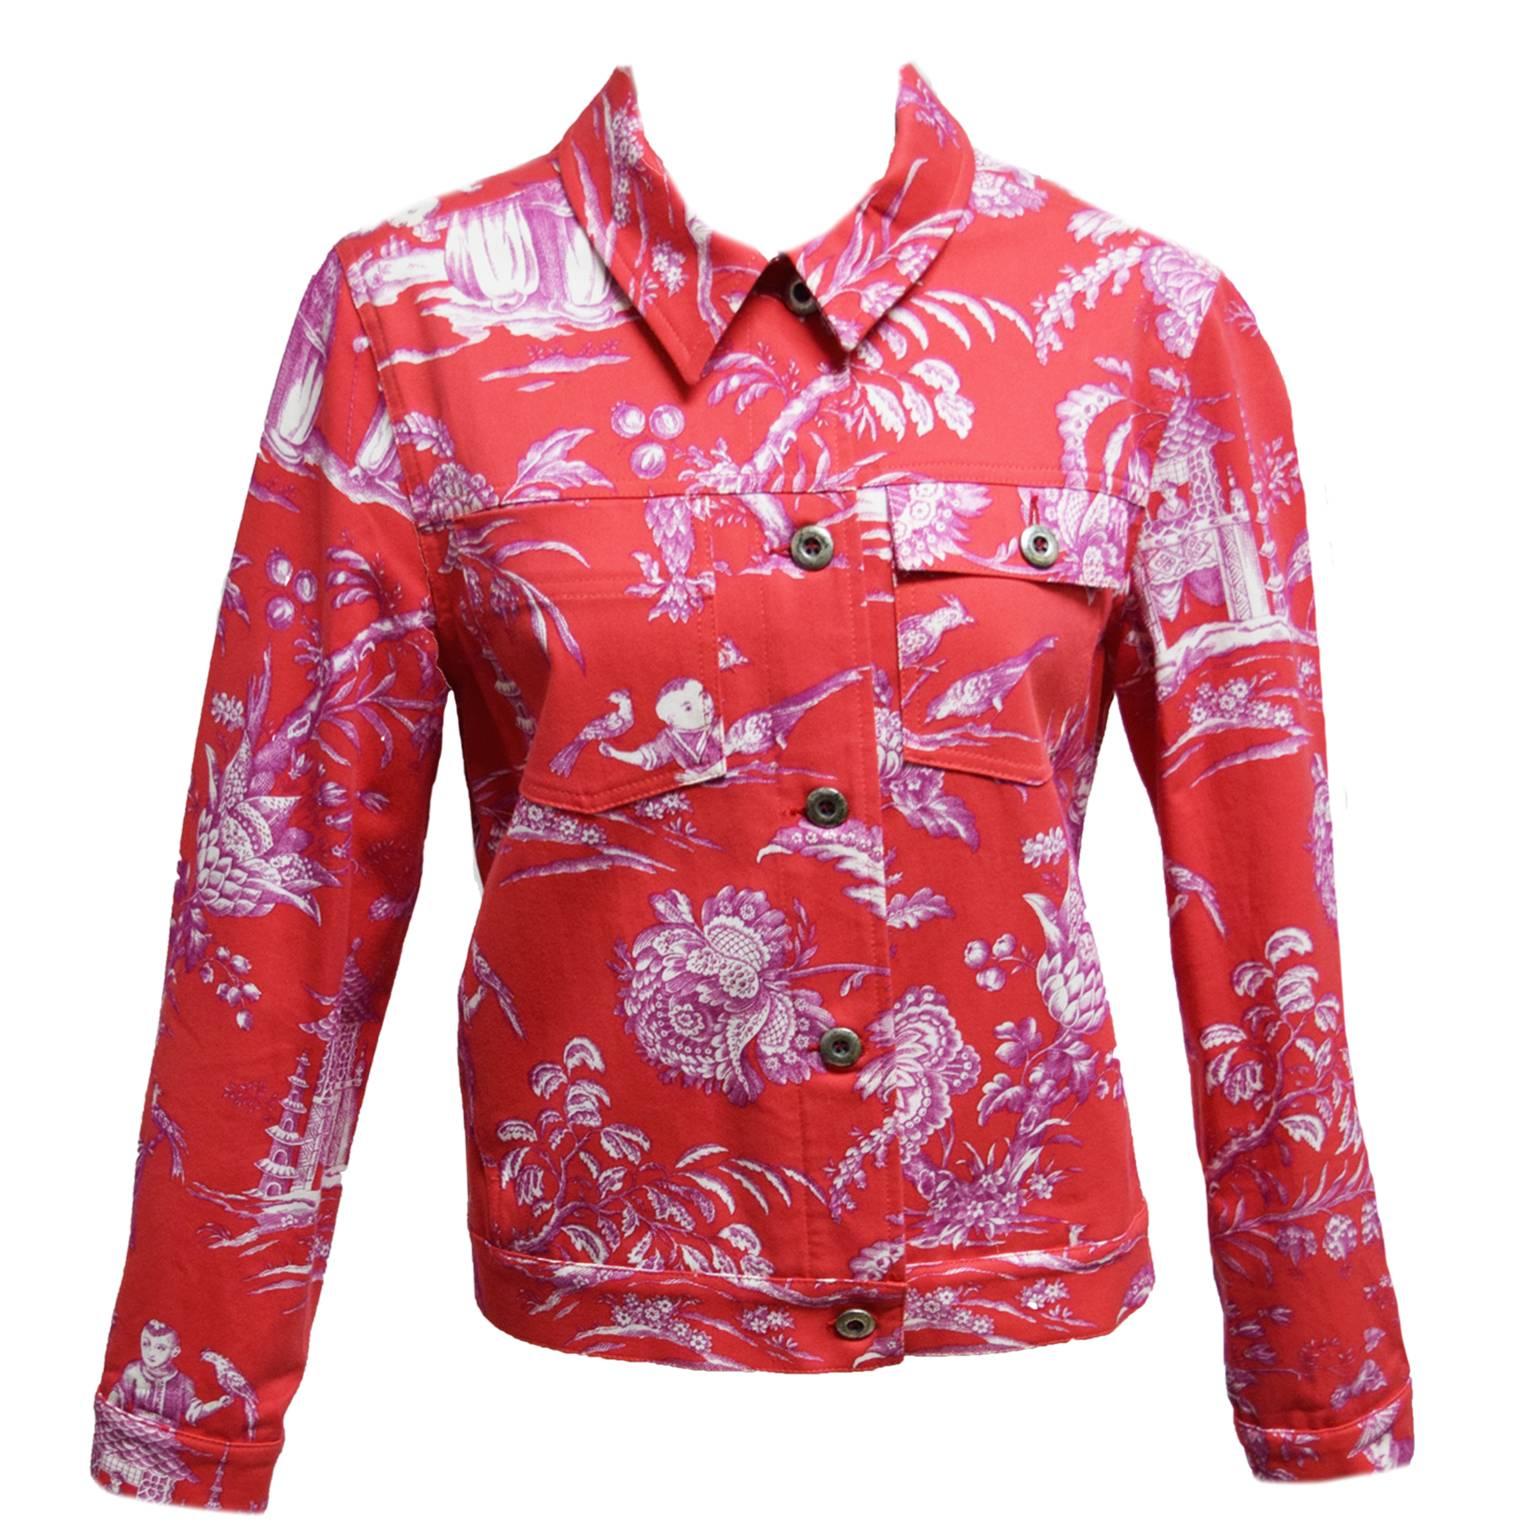 Manuel Canovas Coral Eastern Printed Jacket and Matching Handbag For Sale